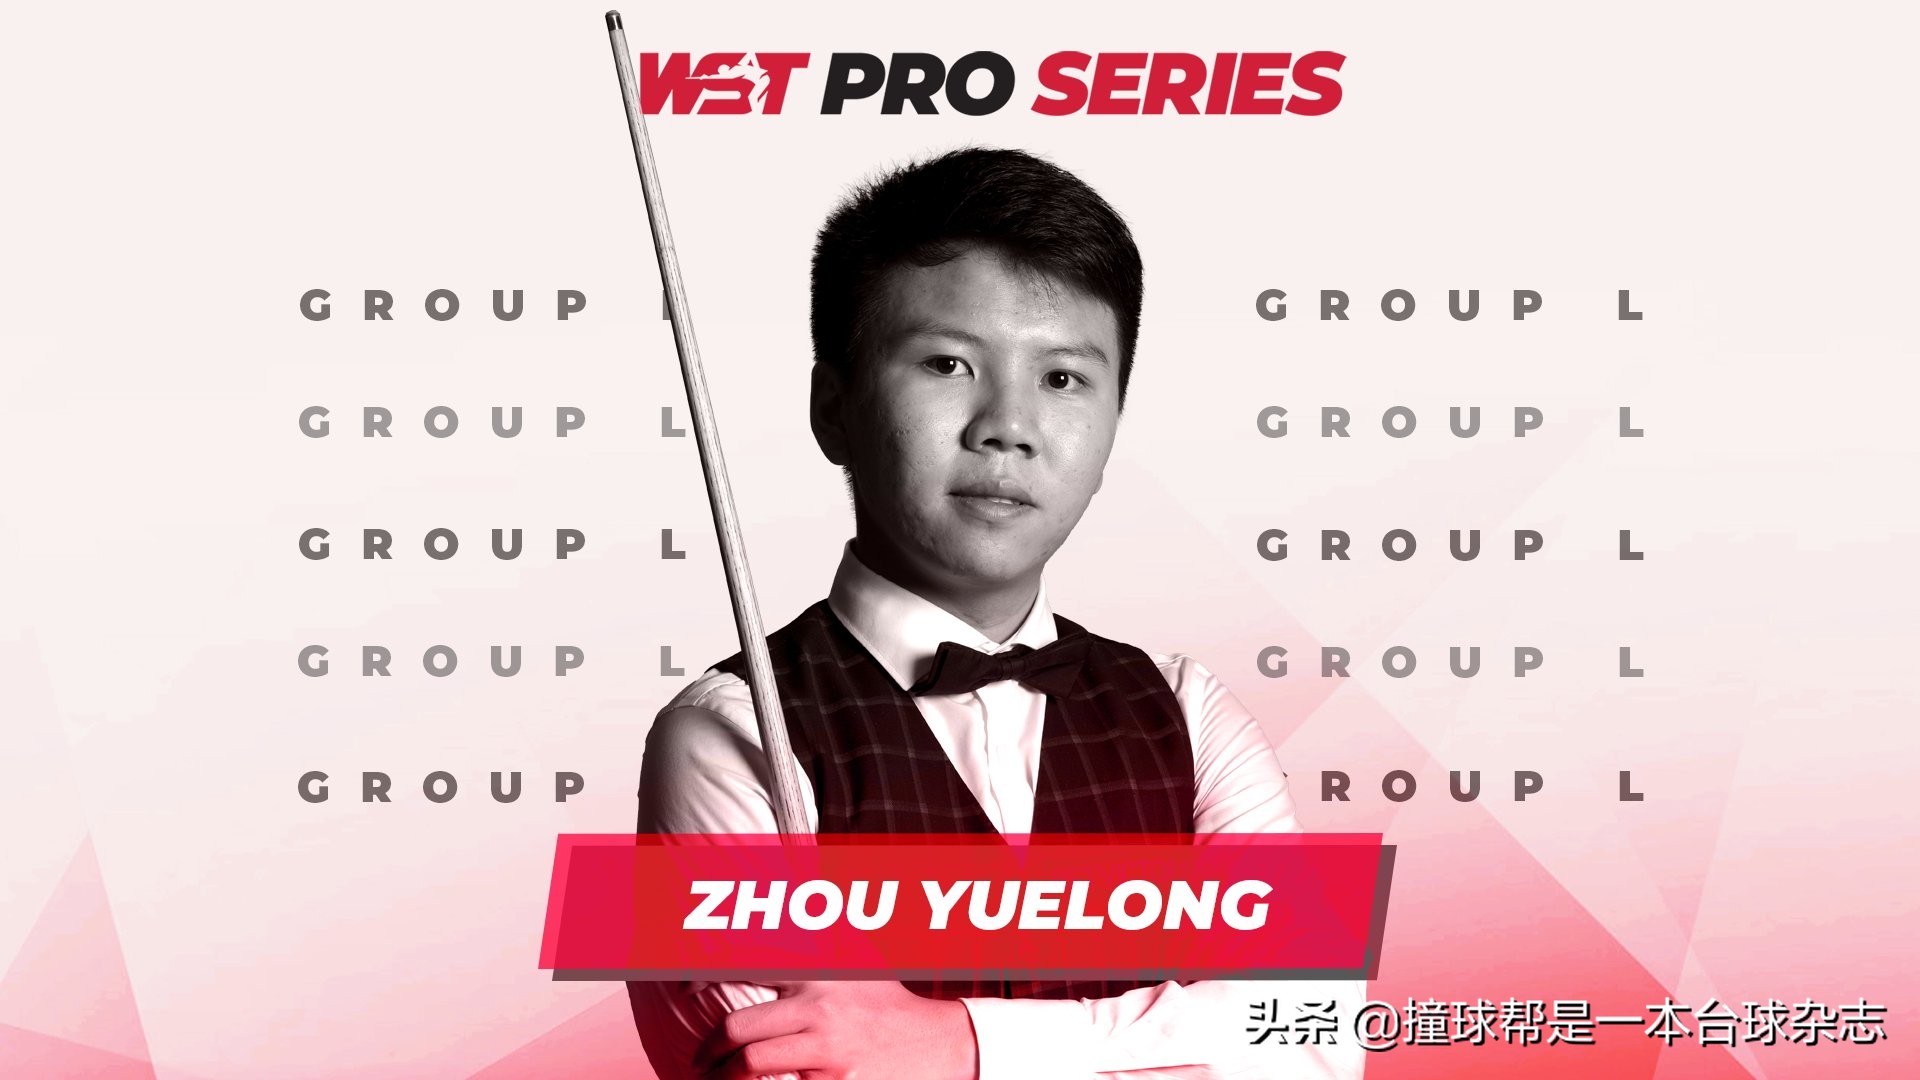 「WST Pro」中国球员大获全胜 罗弘昊携寿星周跃龙同出线